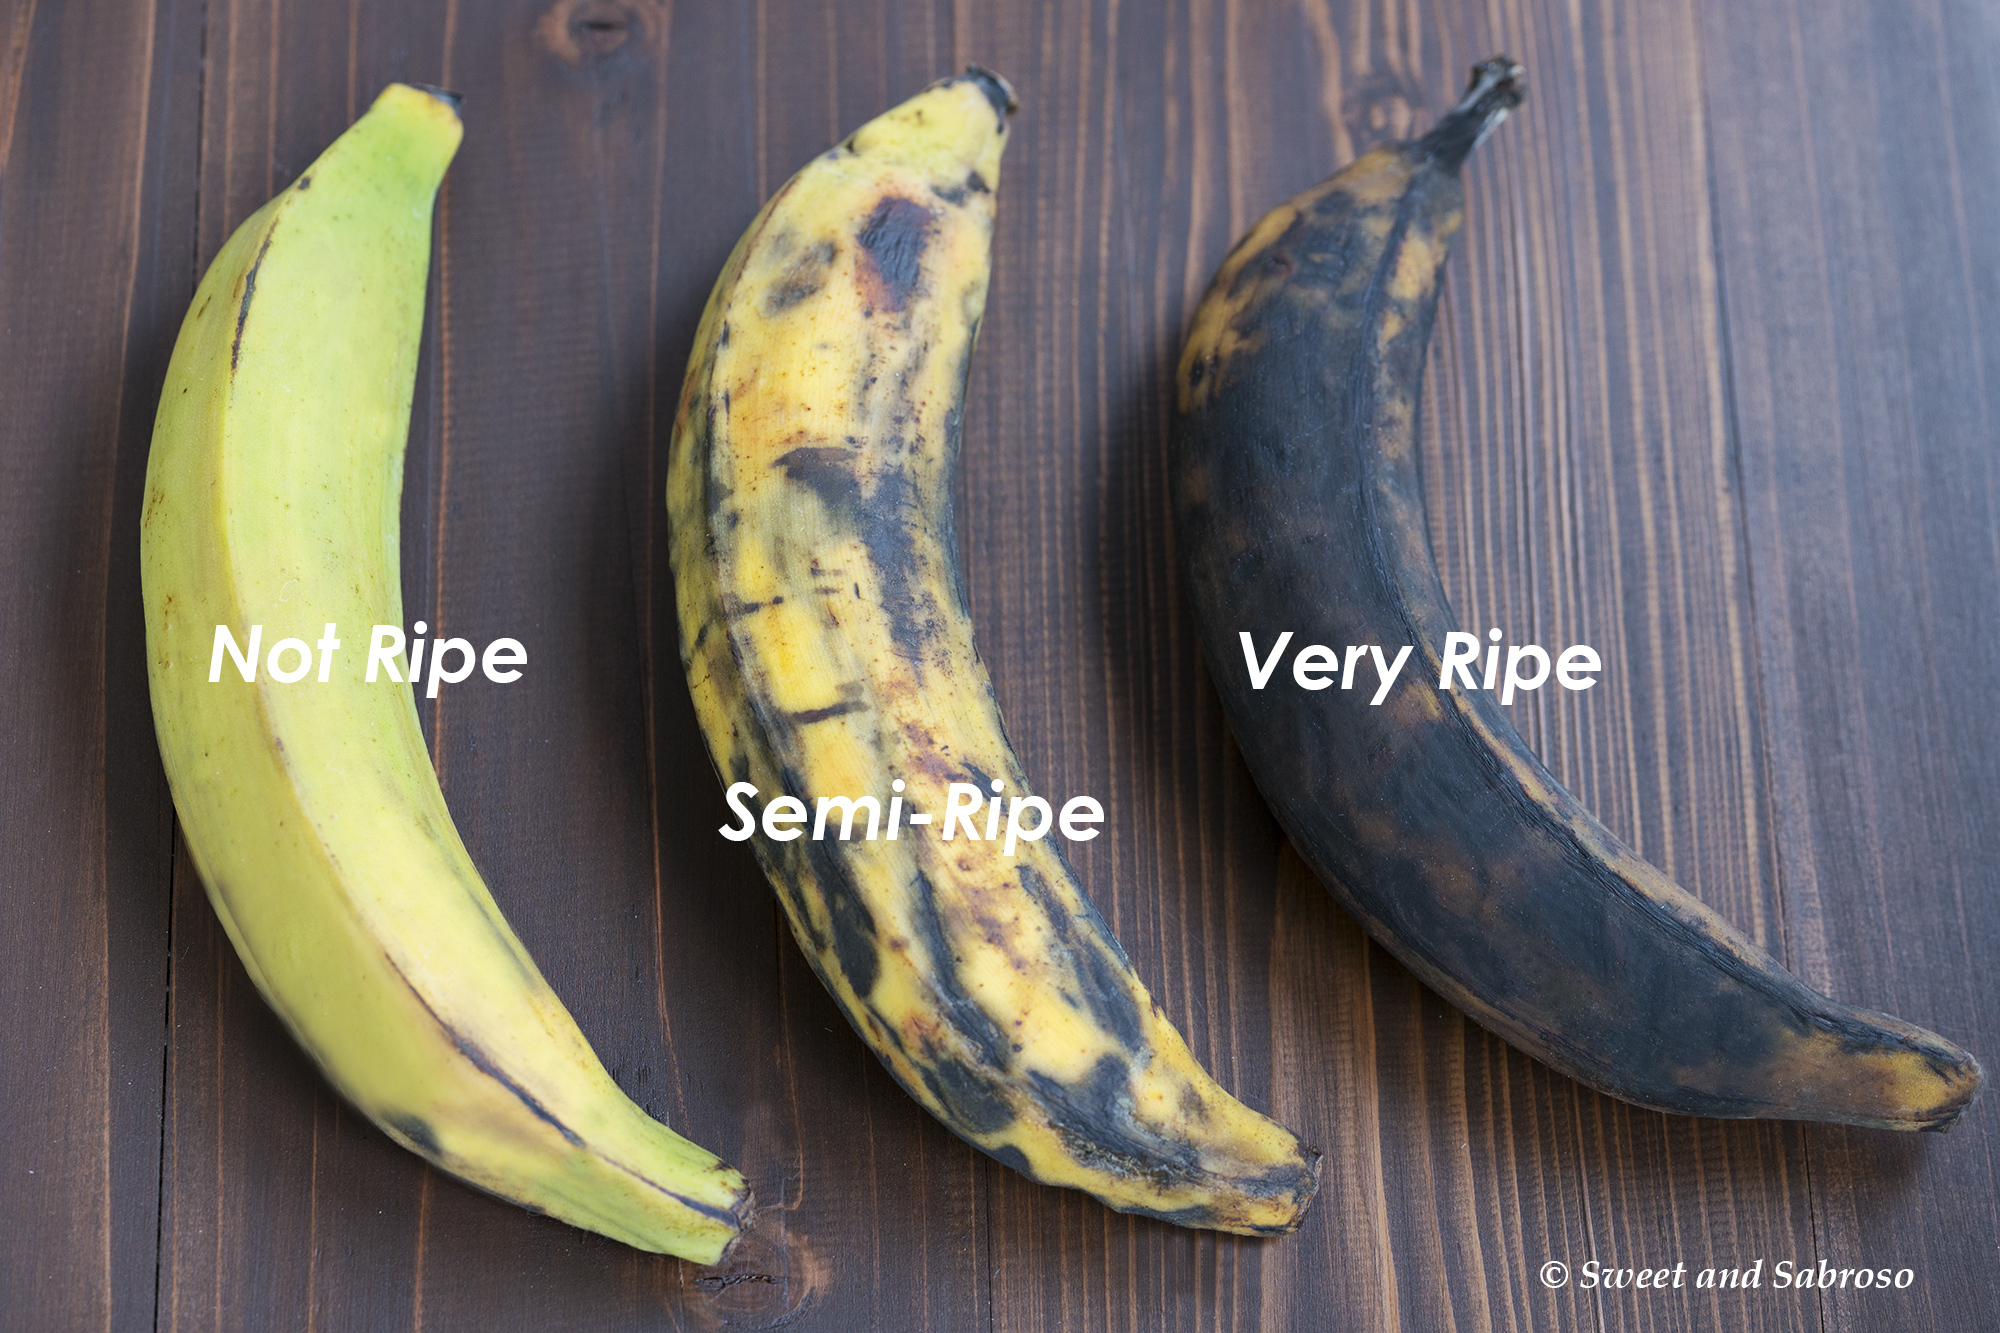 Three Plantains at Different Ripeness Levels: Unripe (Green), Semi-Ripe (Yellowish-Brown) and Very Ripe (Black)